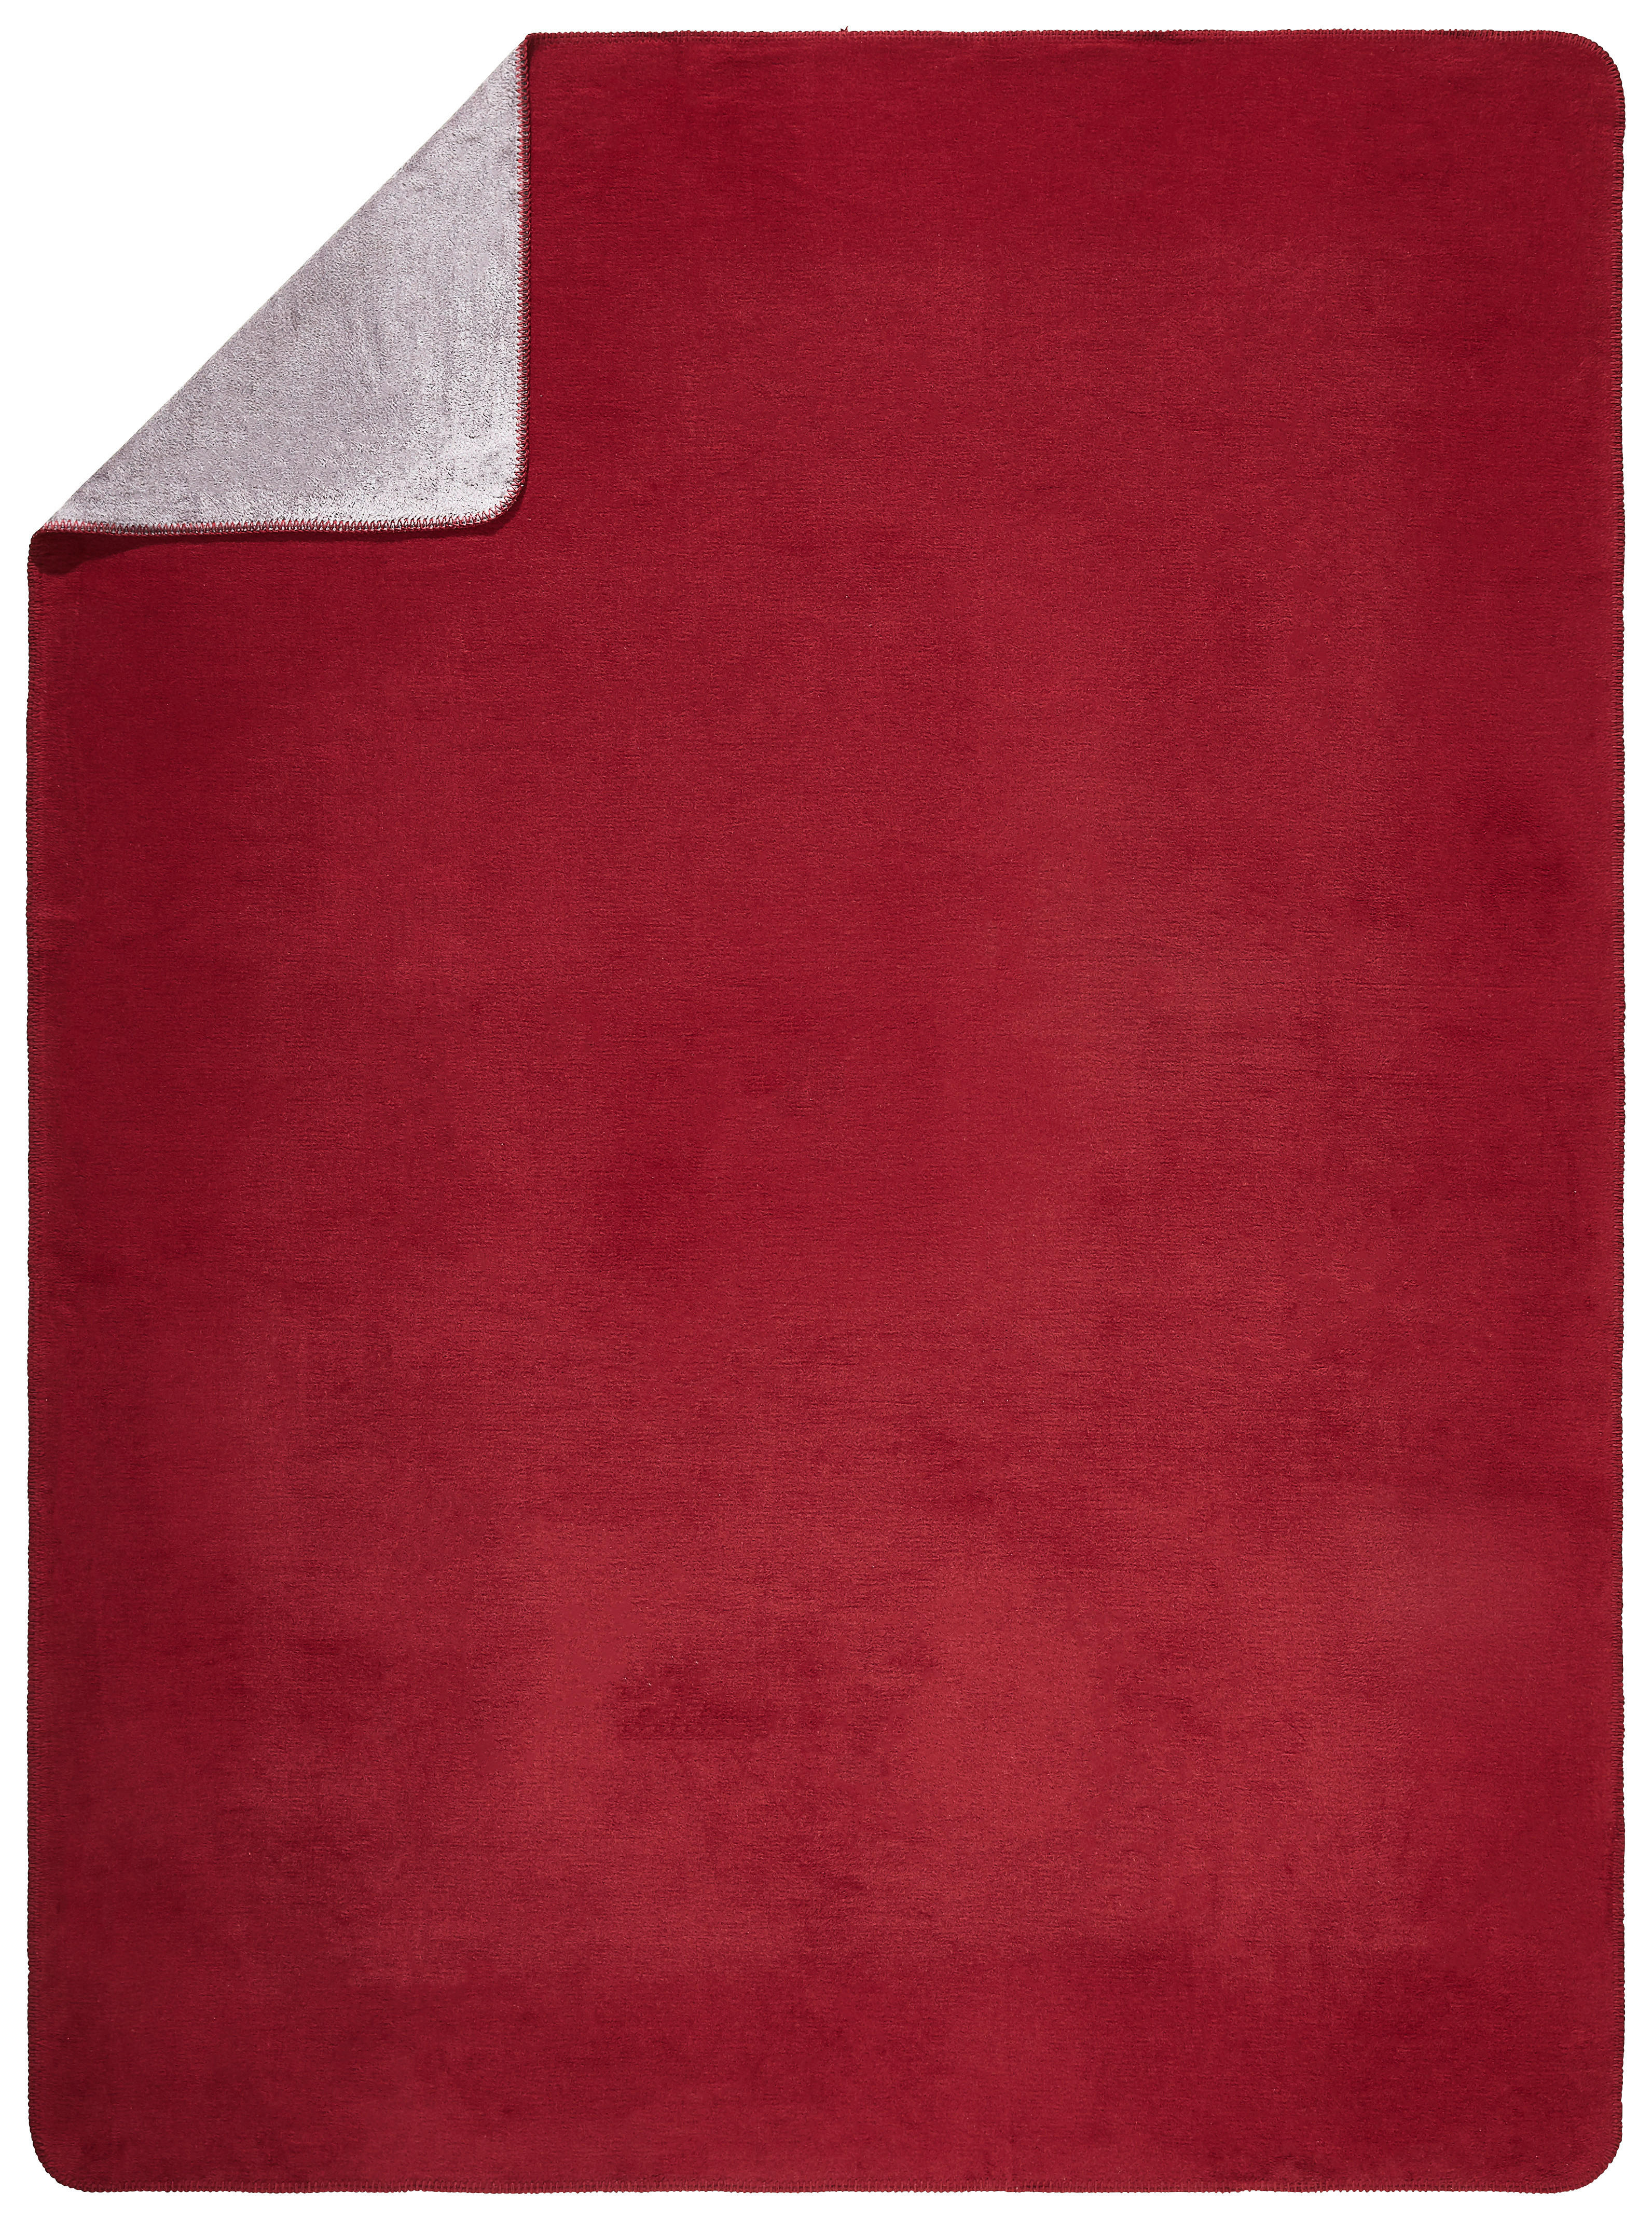 ĆEBE 150/200 cm  - srebrna/crvena, Osnovno, tekstil (150/200cm) - Novel